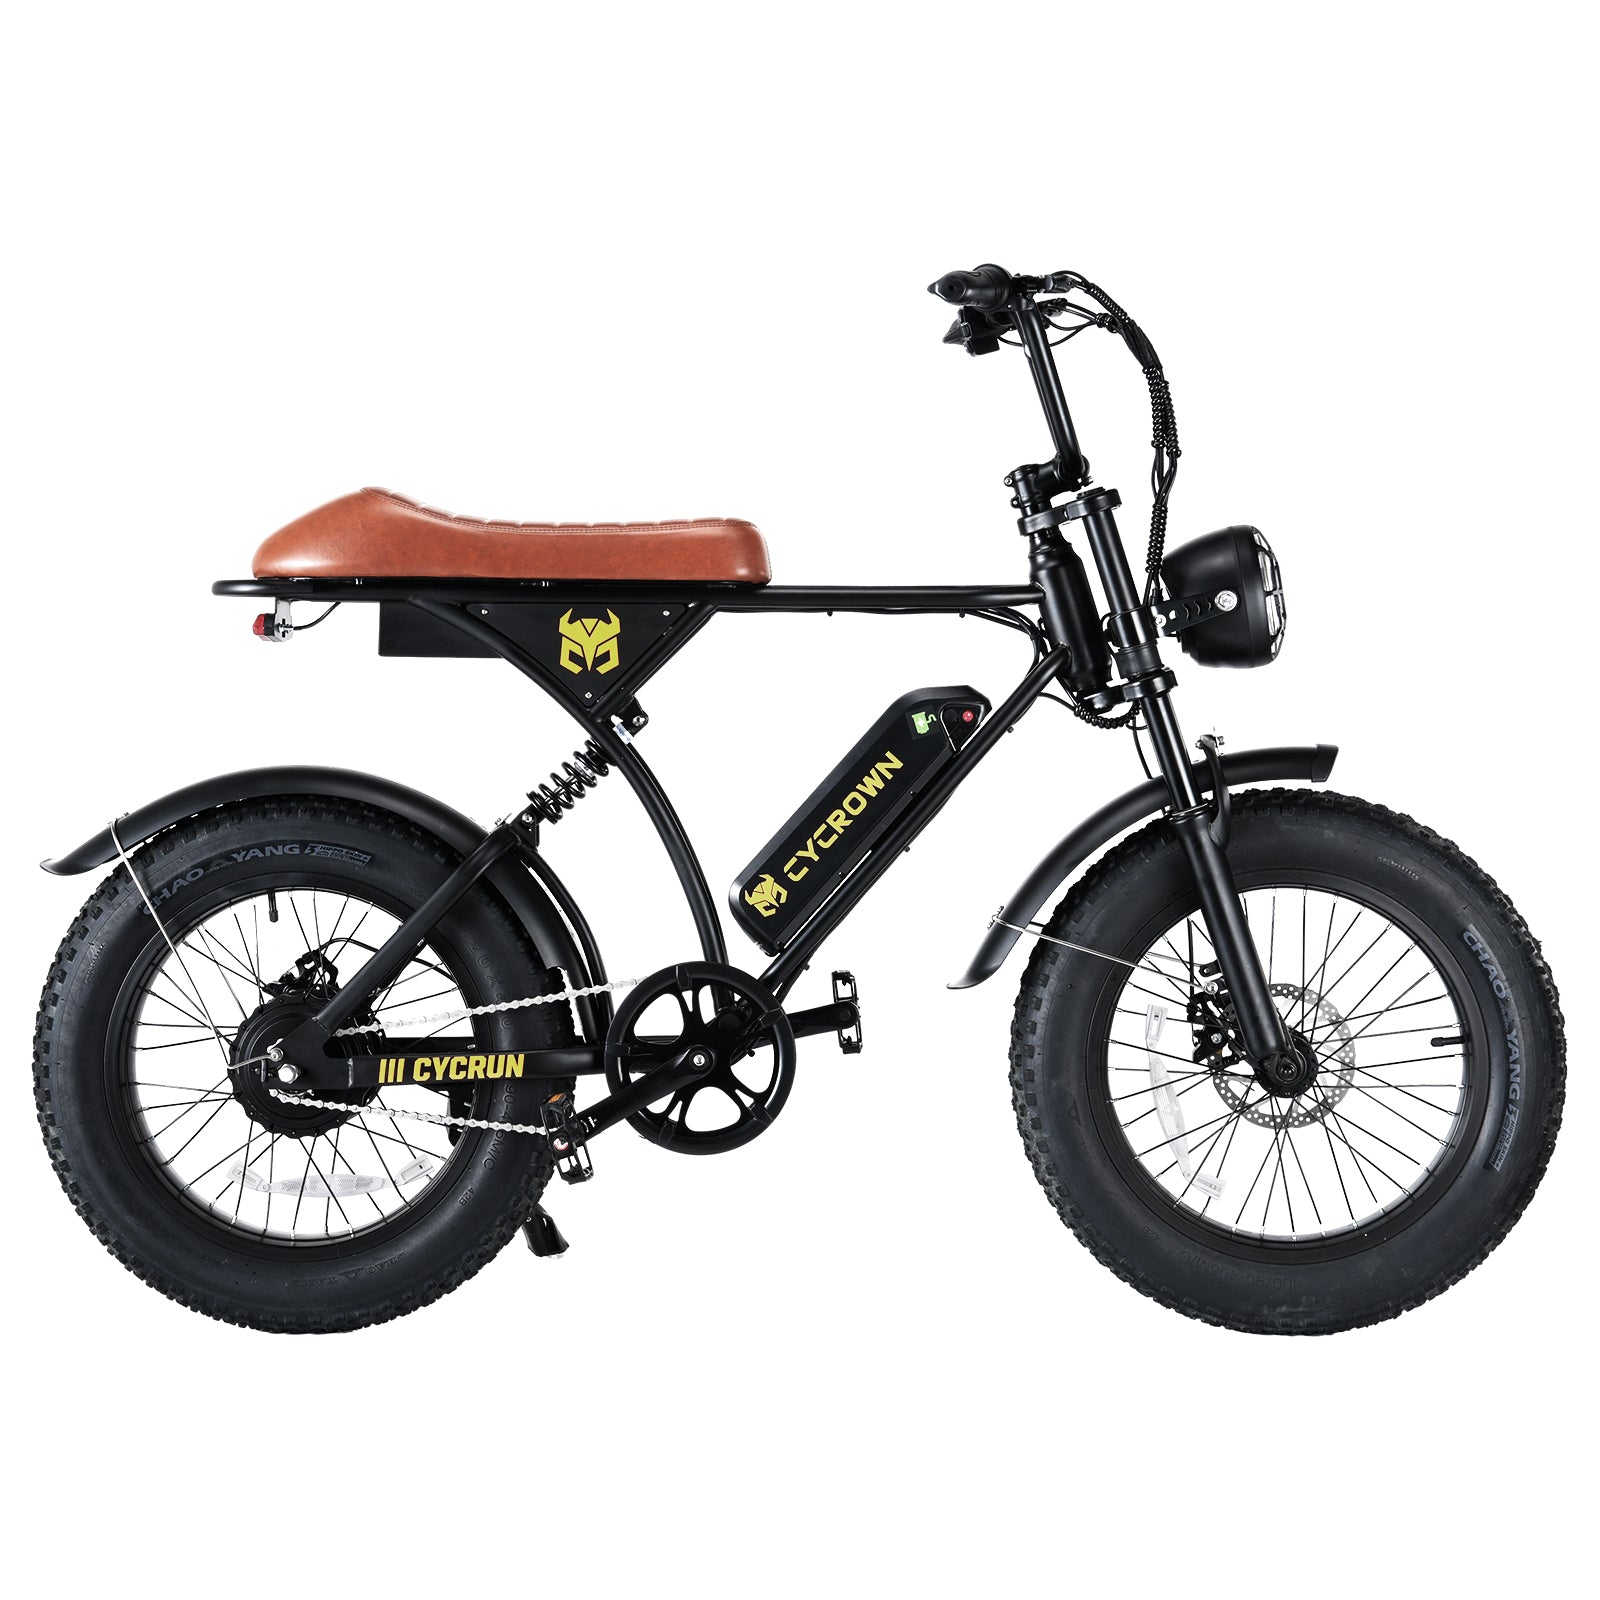 CycRun Moped Electric Bike